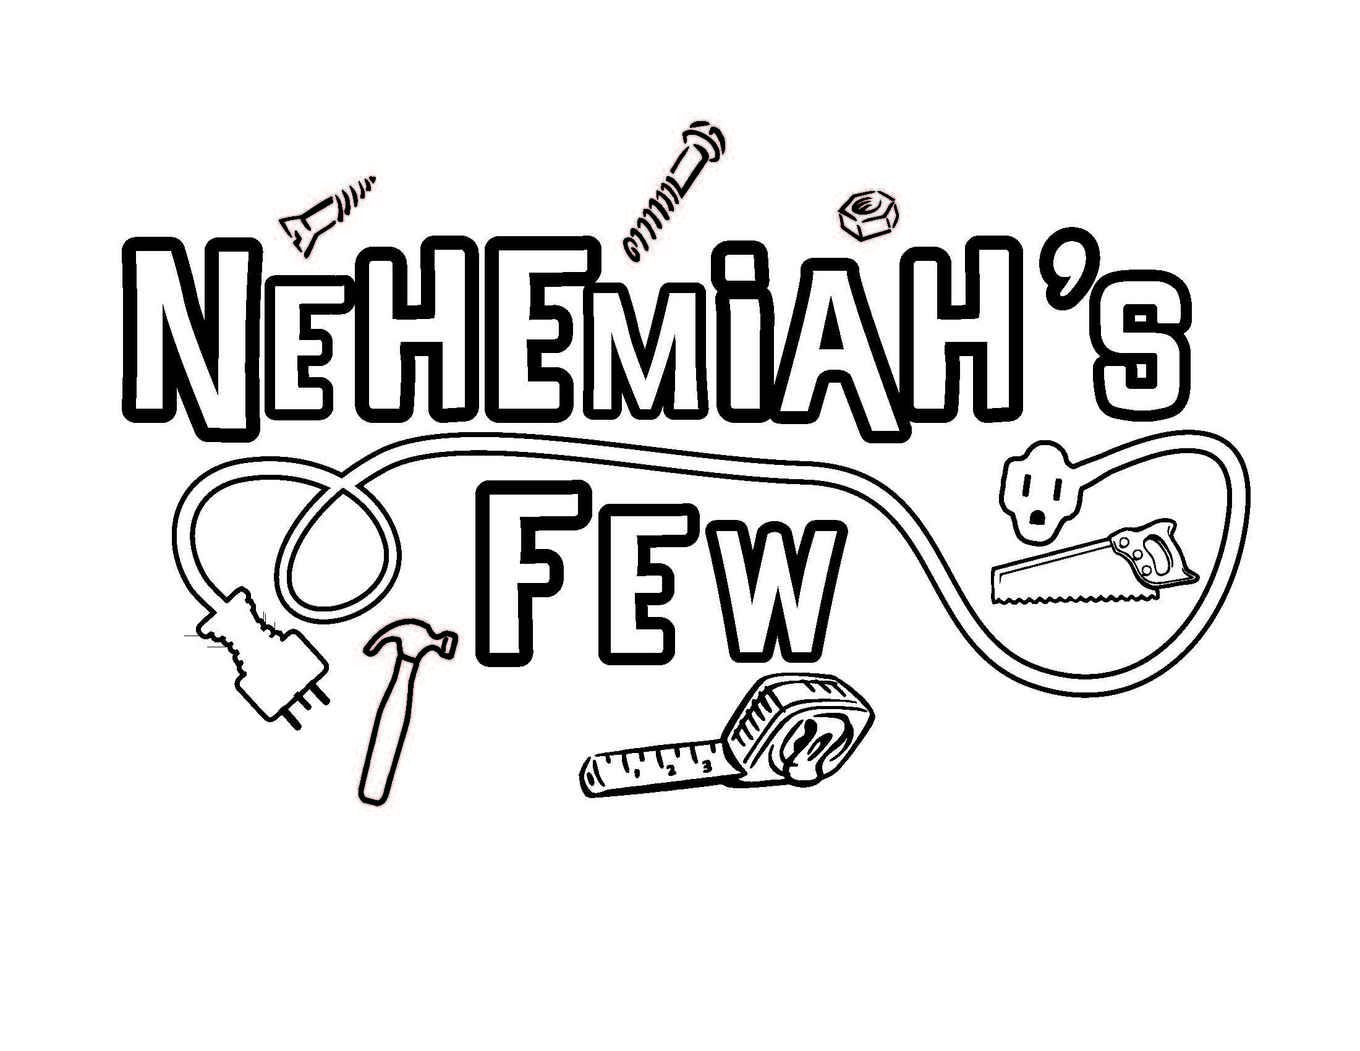 Nehemiah's Few